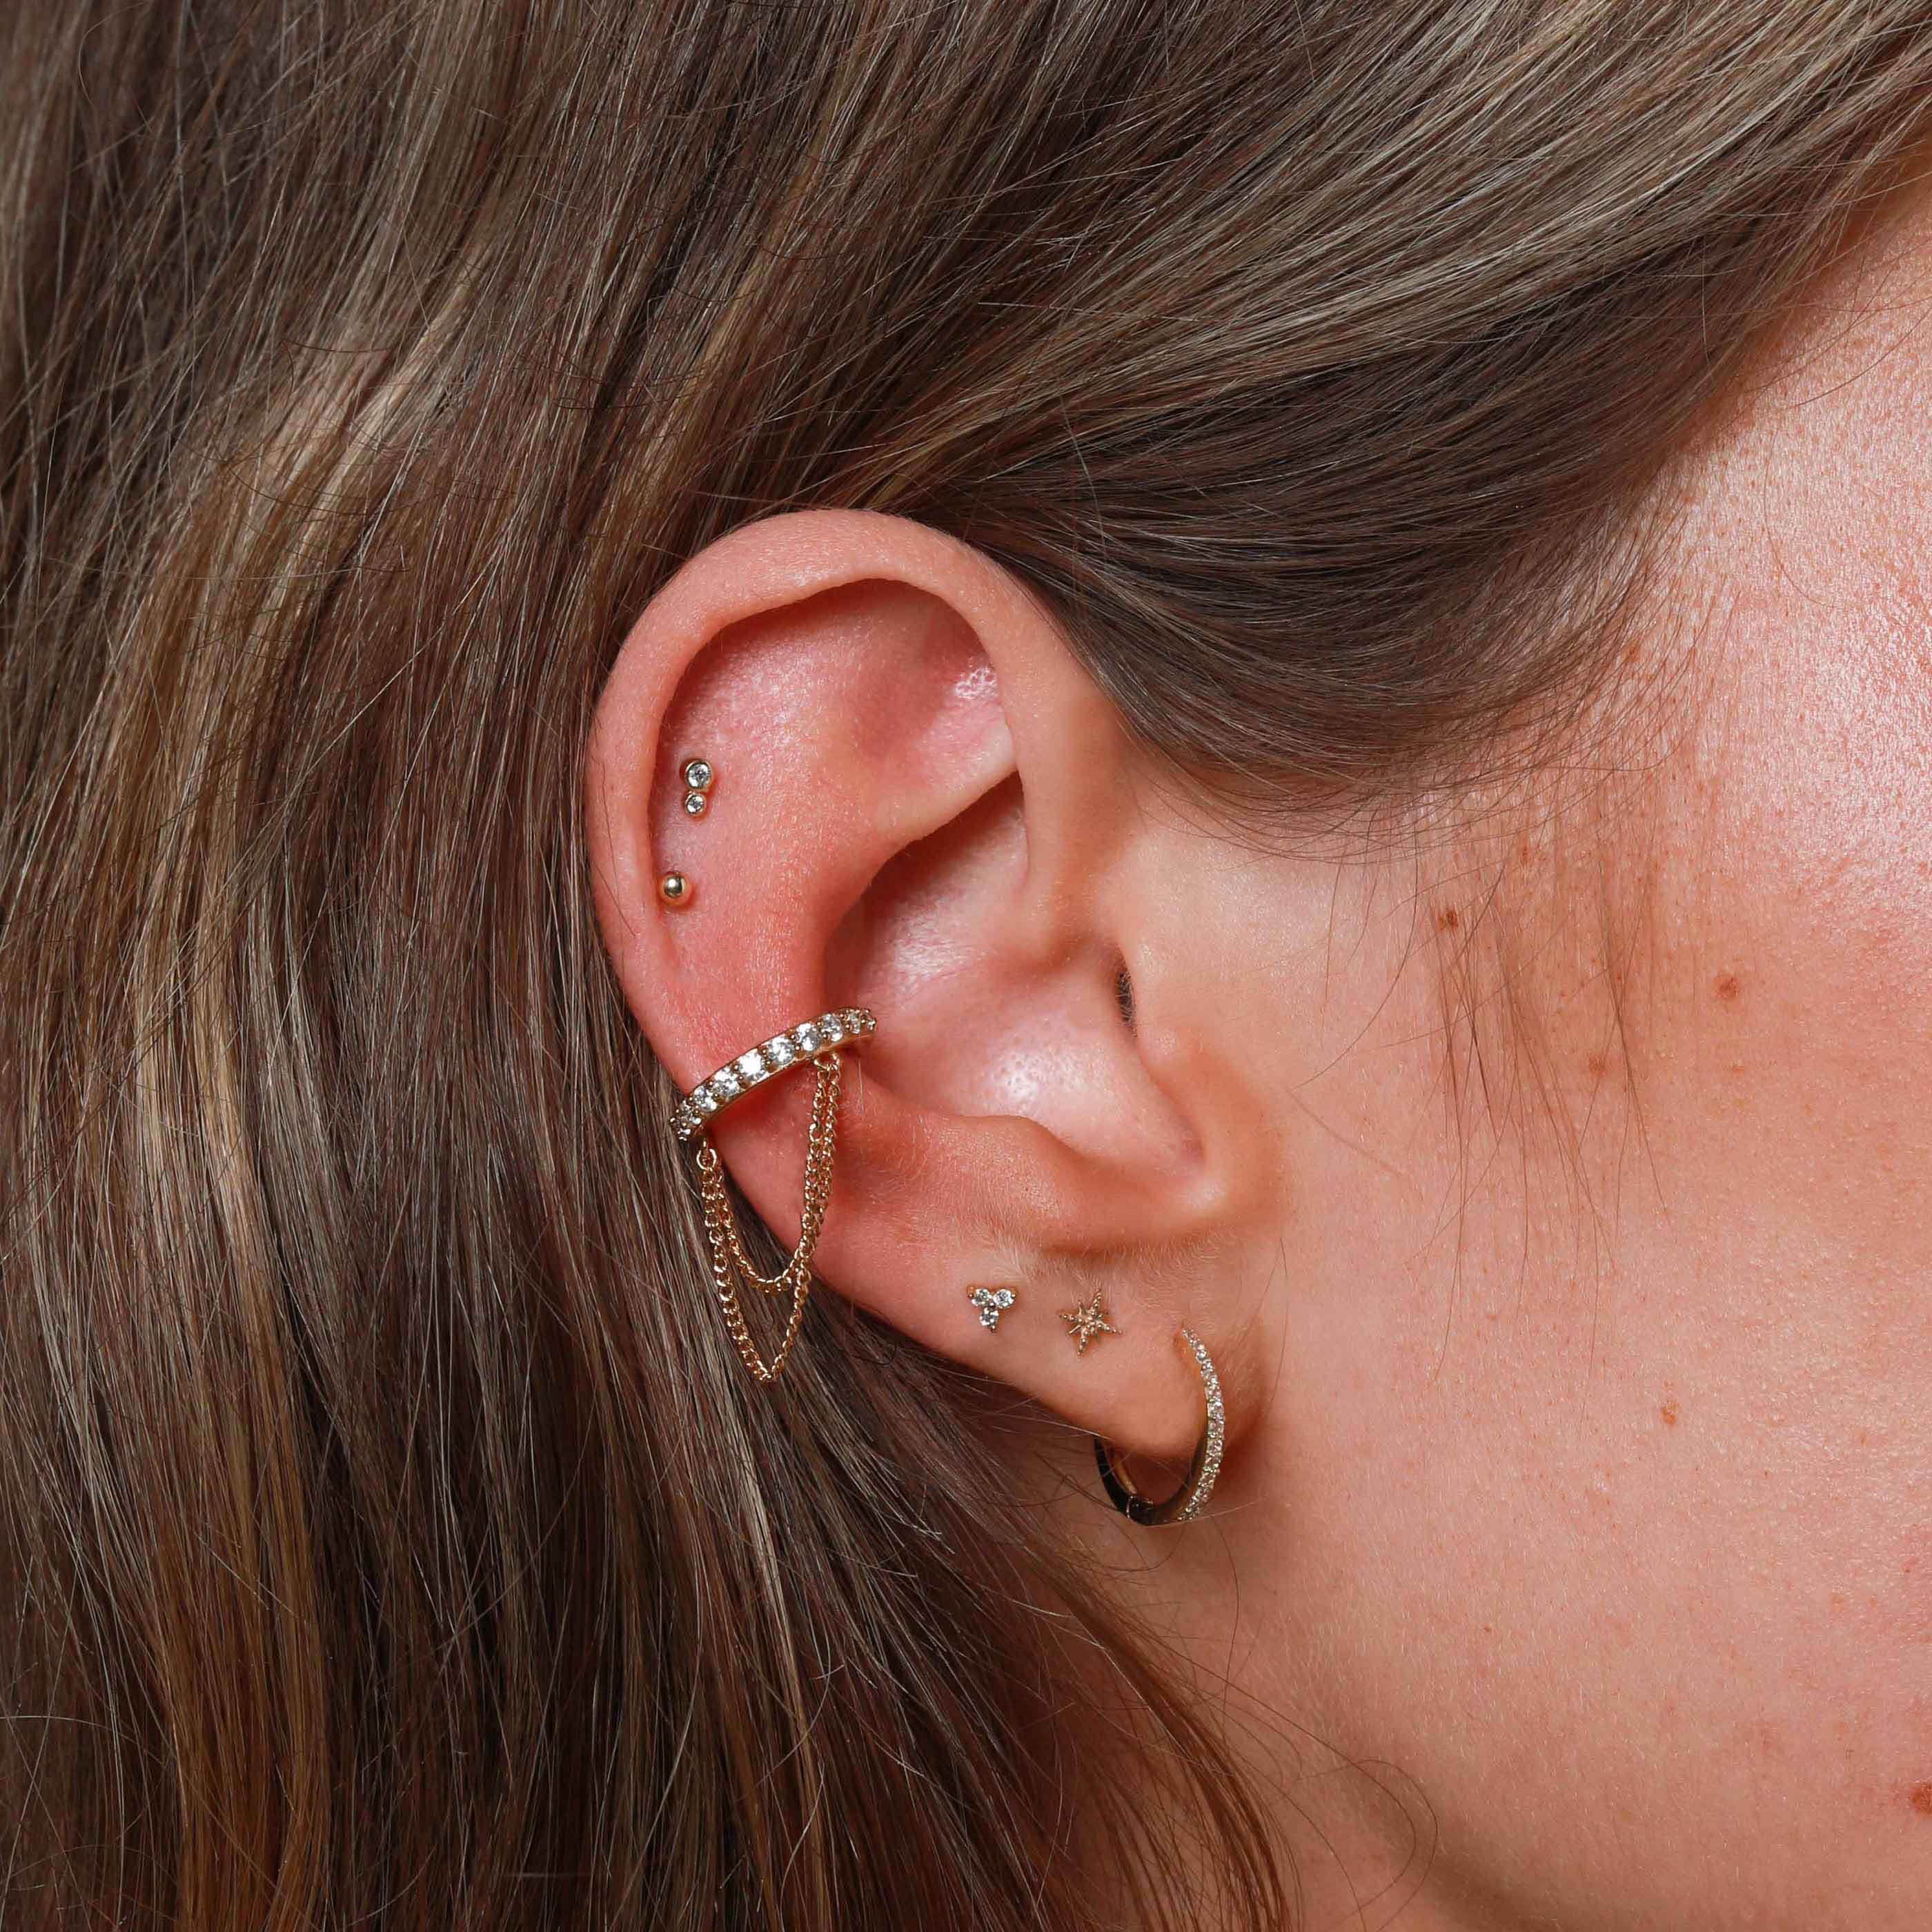 Twilight Stud Earrings in Solid Gold